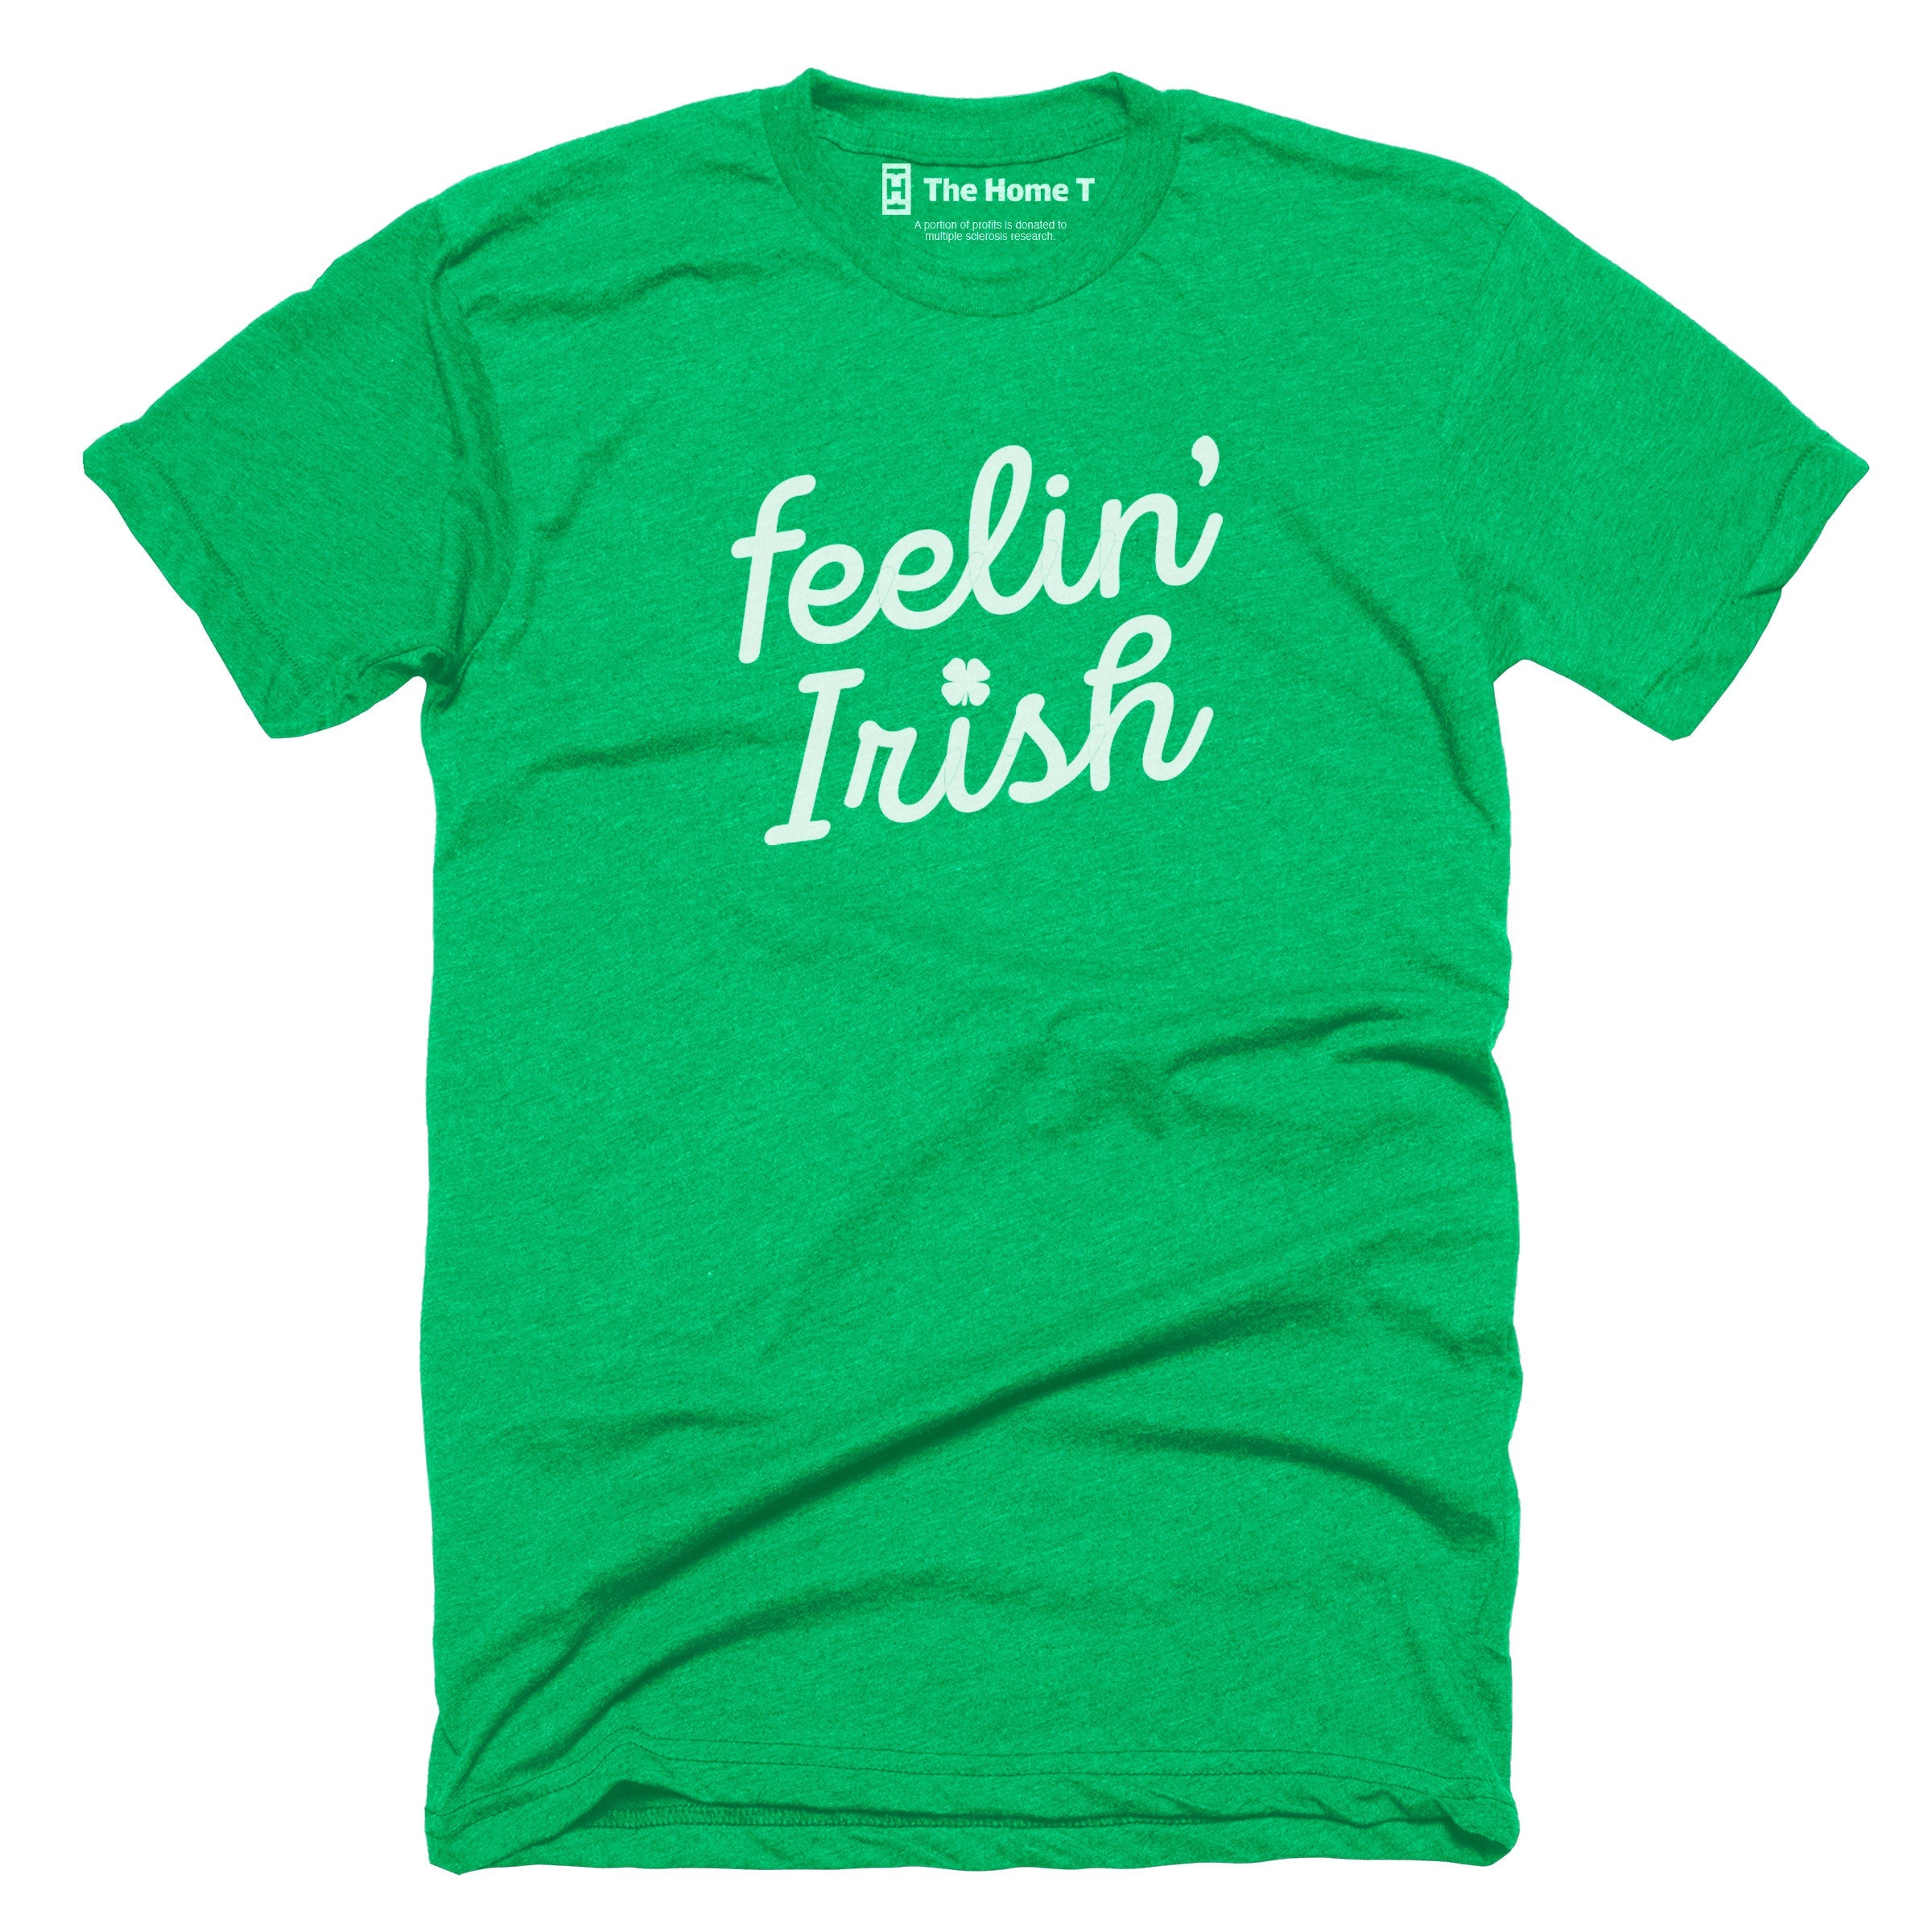 Feelin' Irish